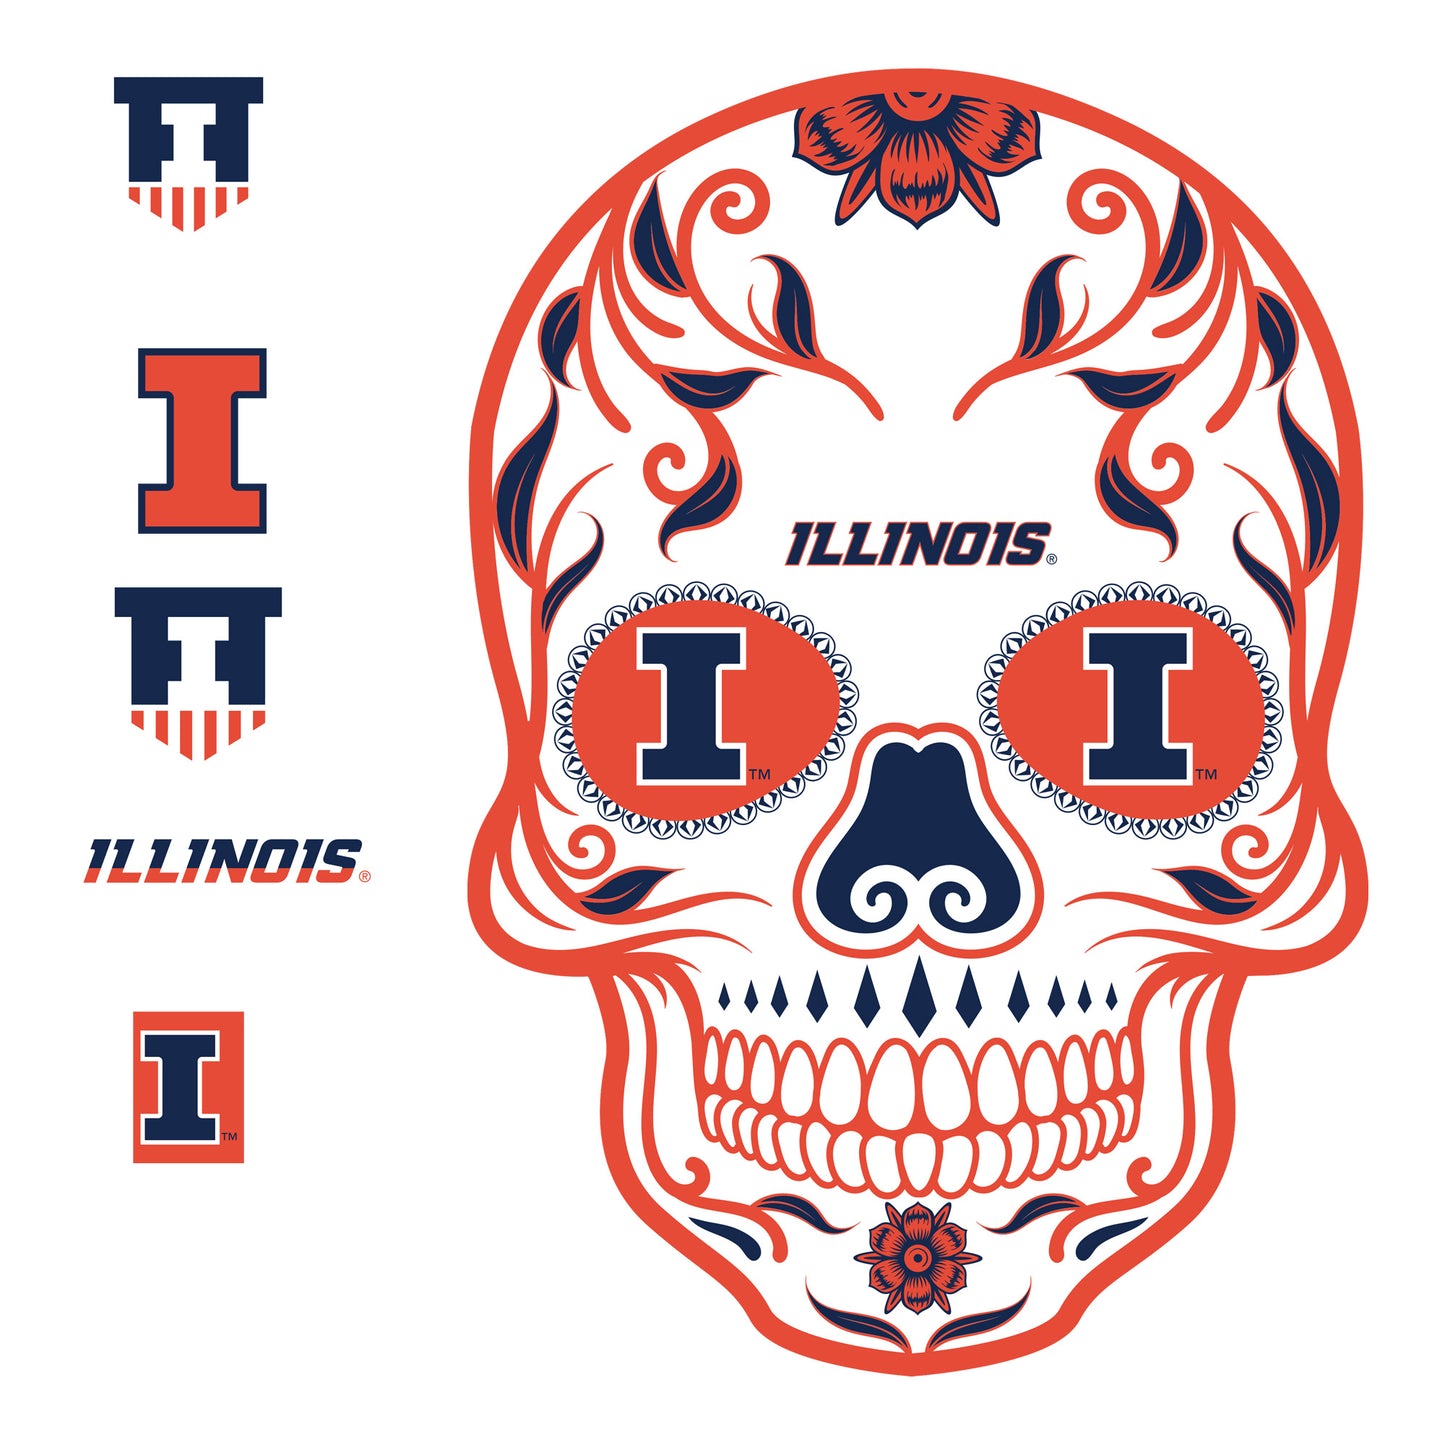 Rare University of Illinois FIGHTING ILLINI Official NCAA Team Logo 22x34  POSTER